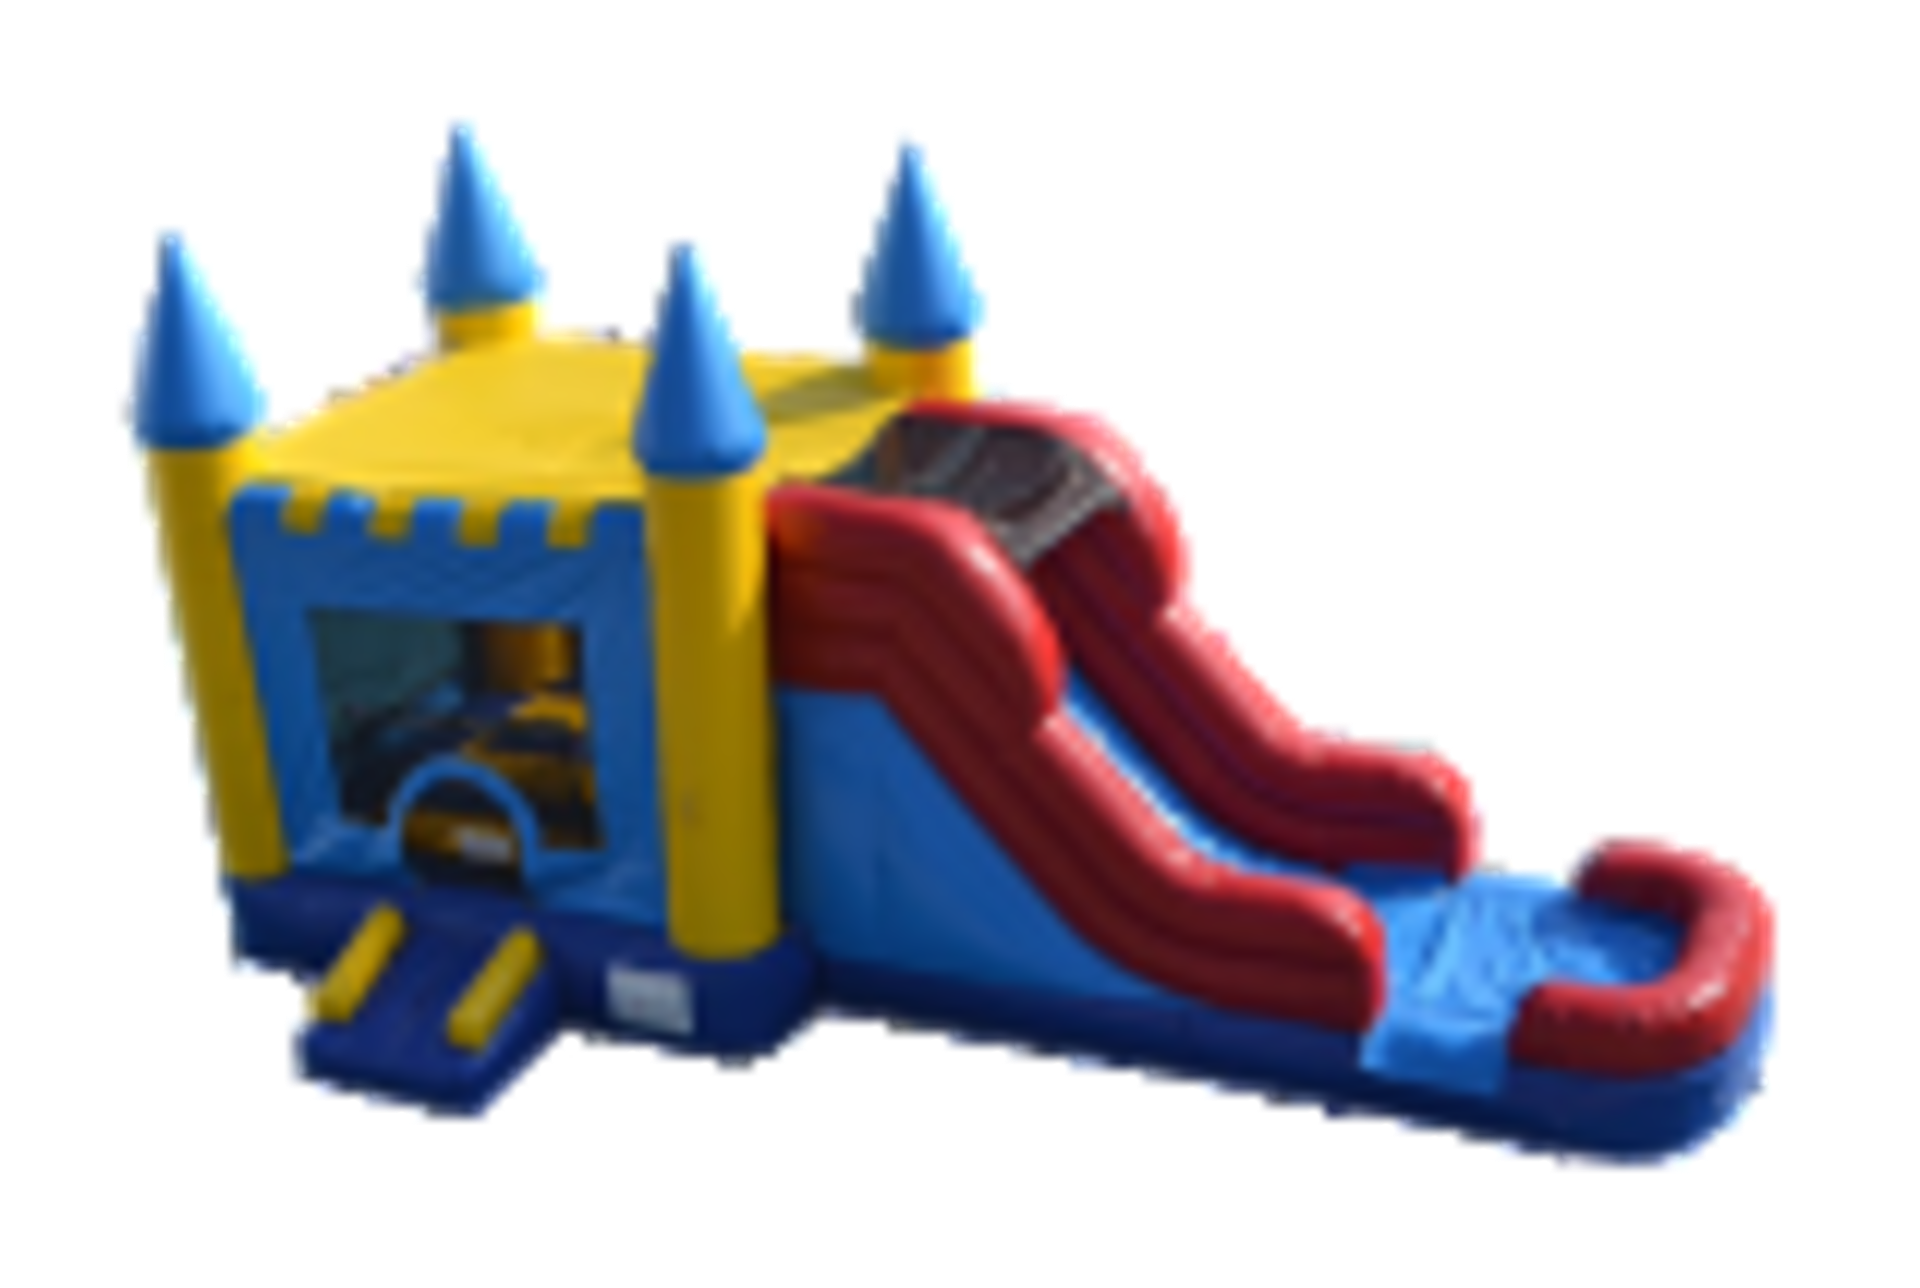 Castle Combo w/ Slide, 28' x 13' x 16' - Image 2 of 2